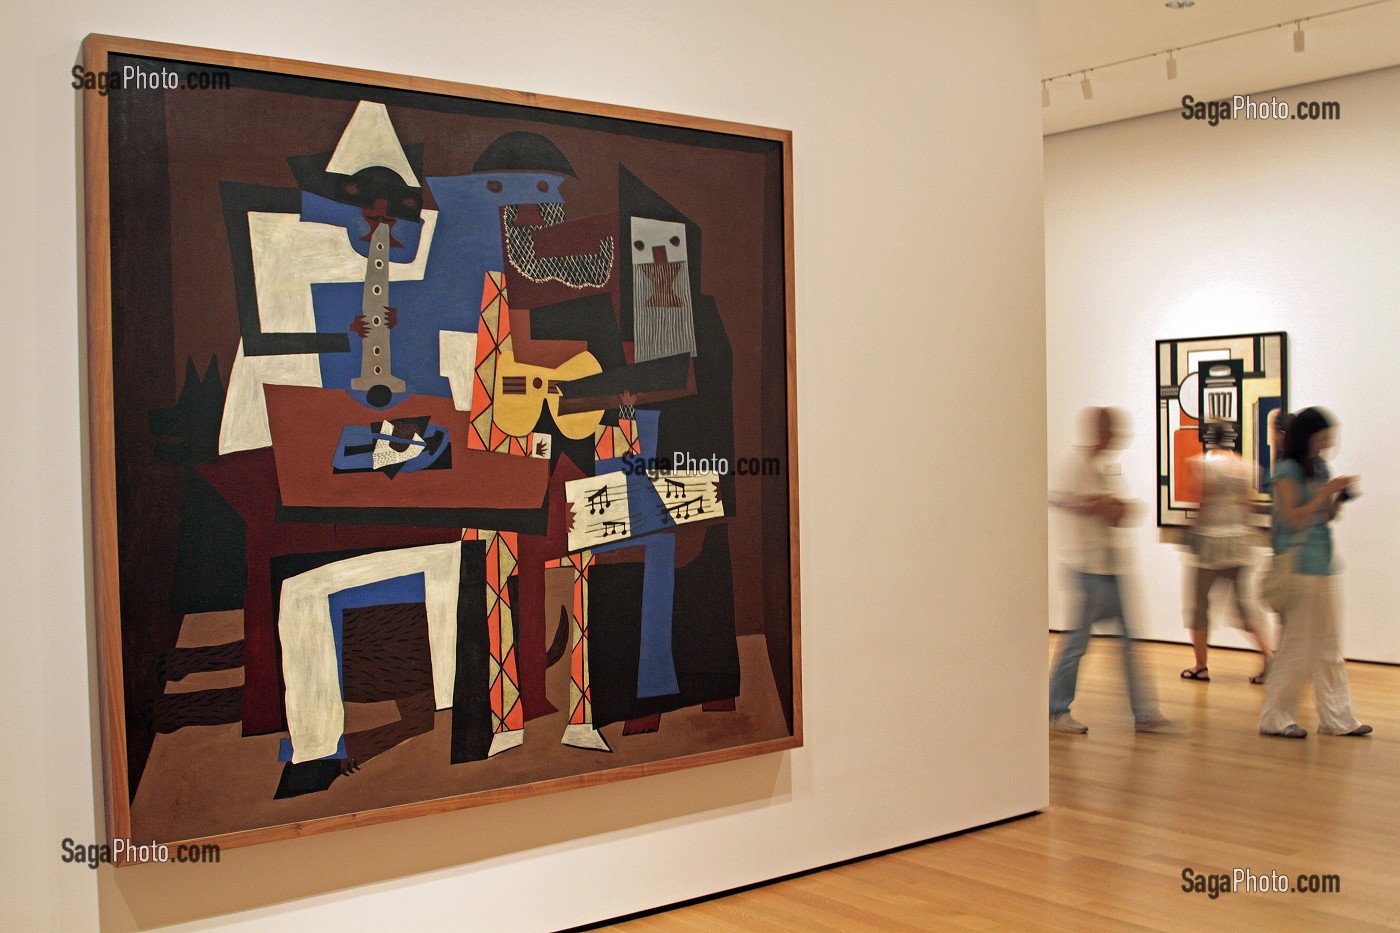 'TROIS MUSICIENS', OEUVRE DE PABLO PICASSO (1881-1973), MOMA (MUSEUM OF MODERN ART), MUSEE D'ART MODERNE, QUARTIER DE MIDTOWN, MANHATTAN, NEW YORK CITY, ETAT DE NEW YORK, ETATS-UNIS 